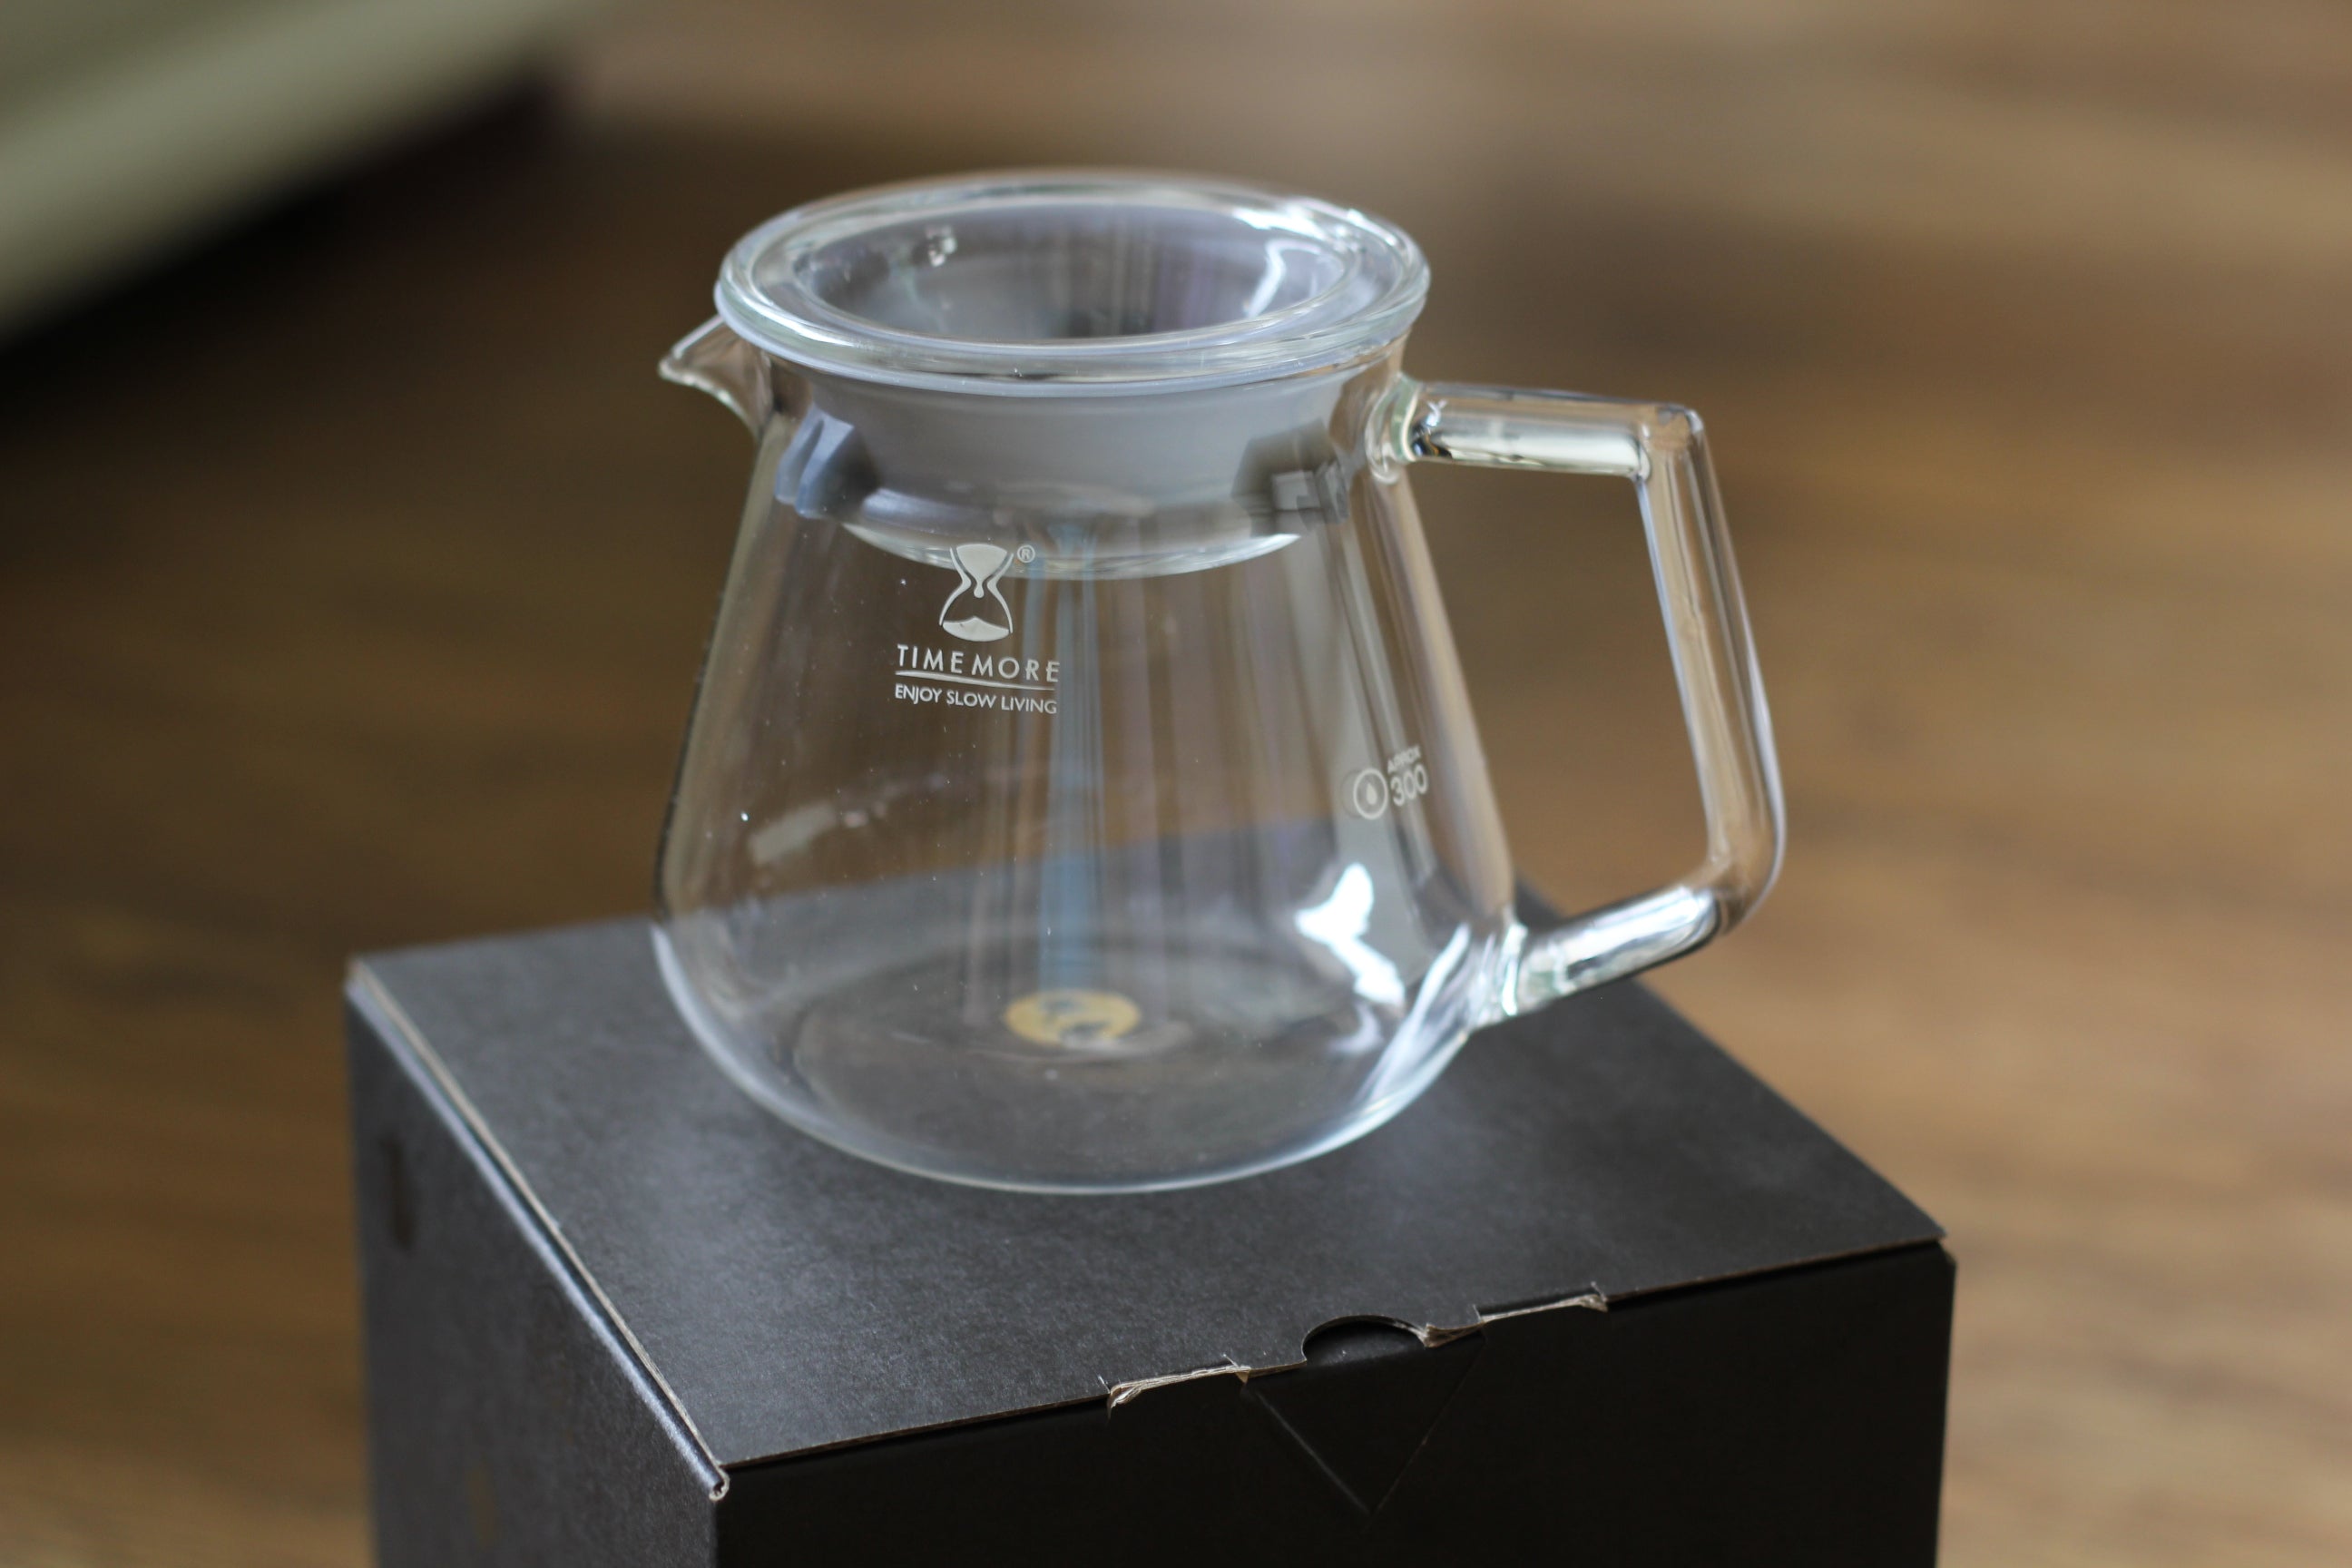 Timemore Glass Coffee Server